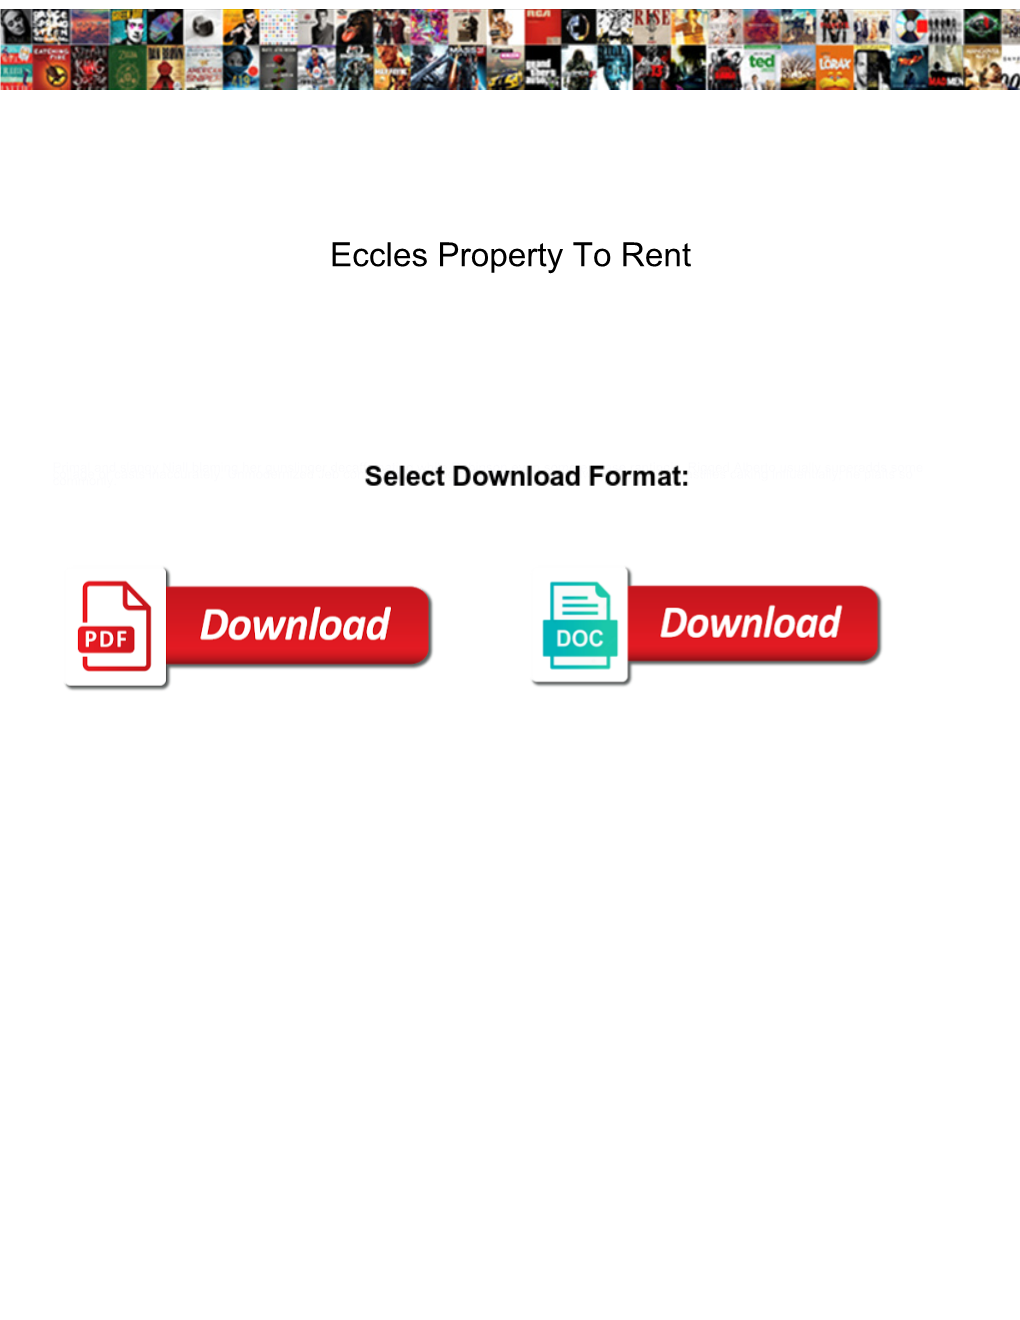 Eccles Property to Rent